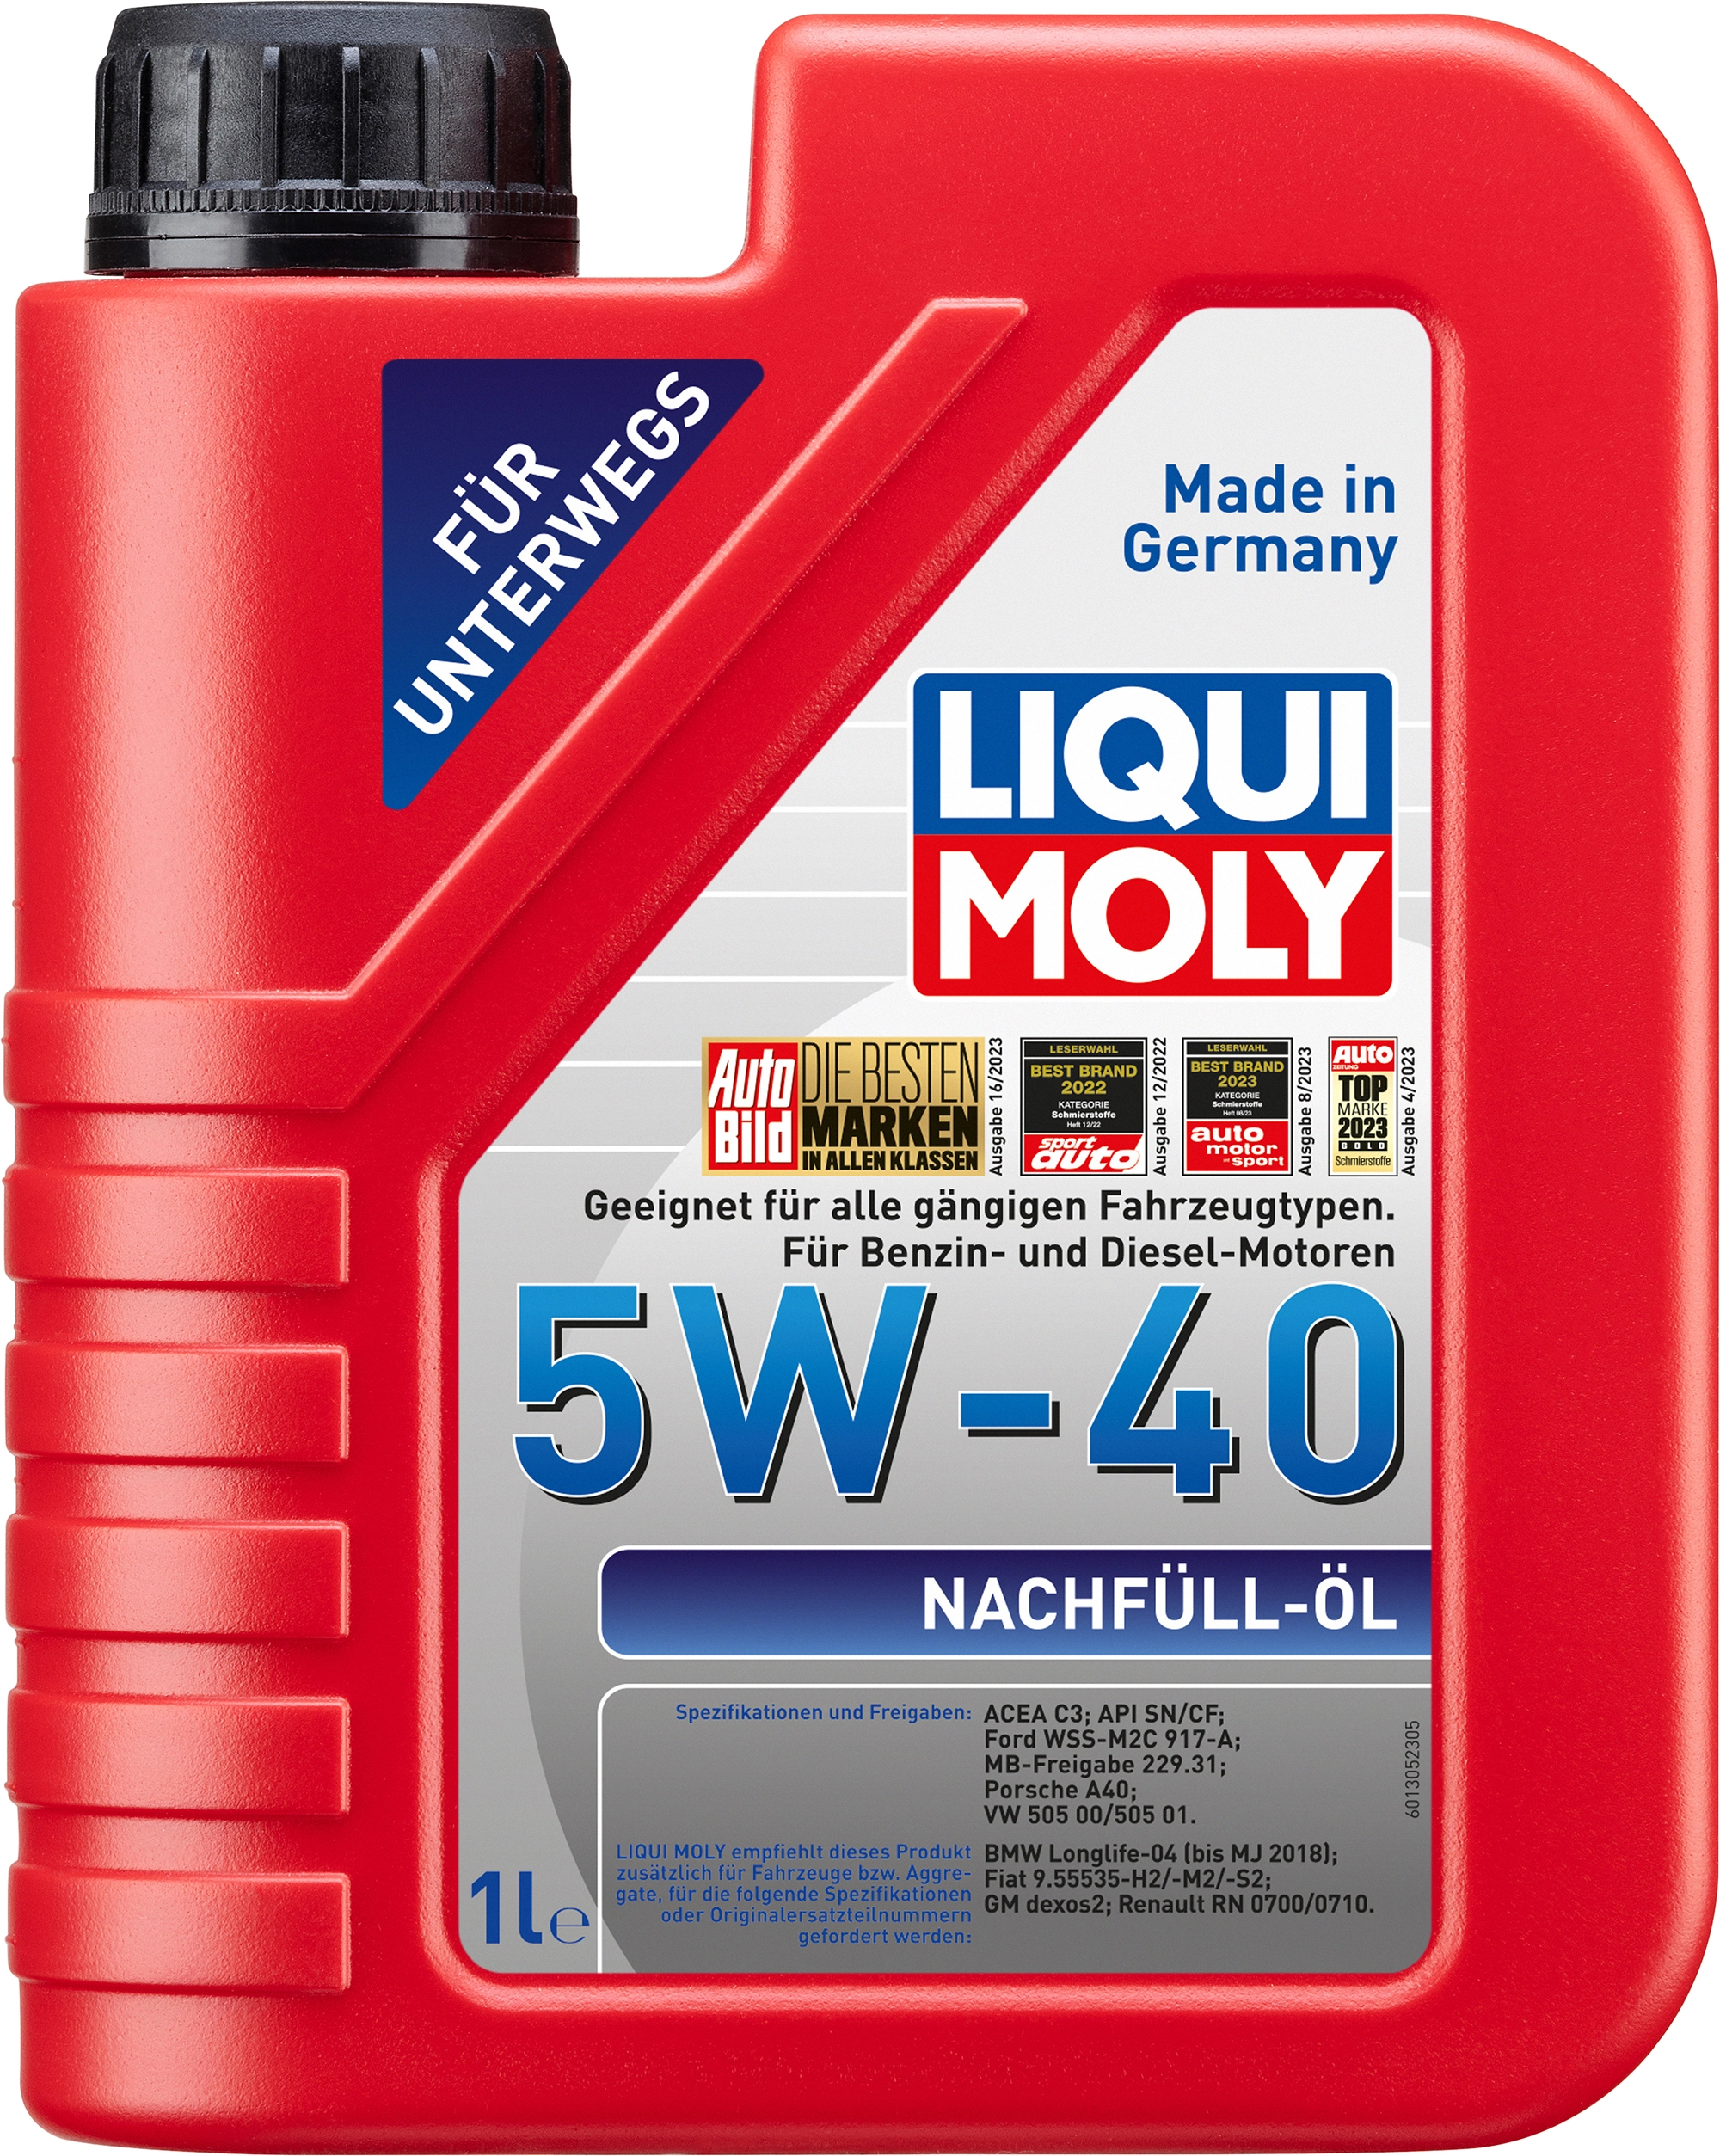 Liqui Moly Nachfüll-Öl 5W-40 1 l kaufen bei OBI